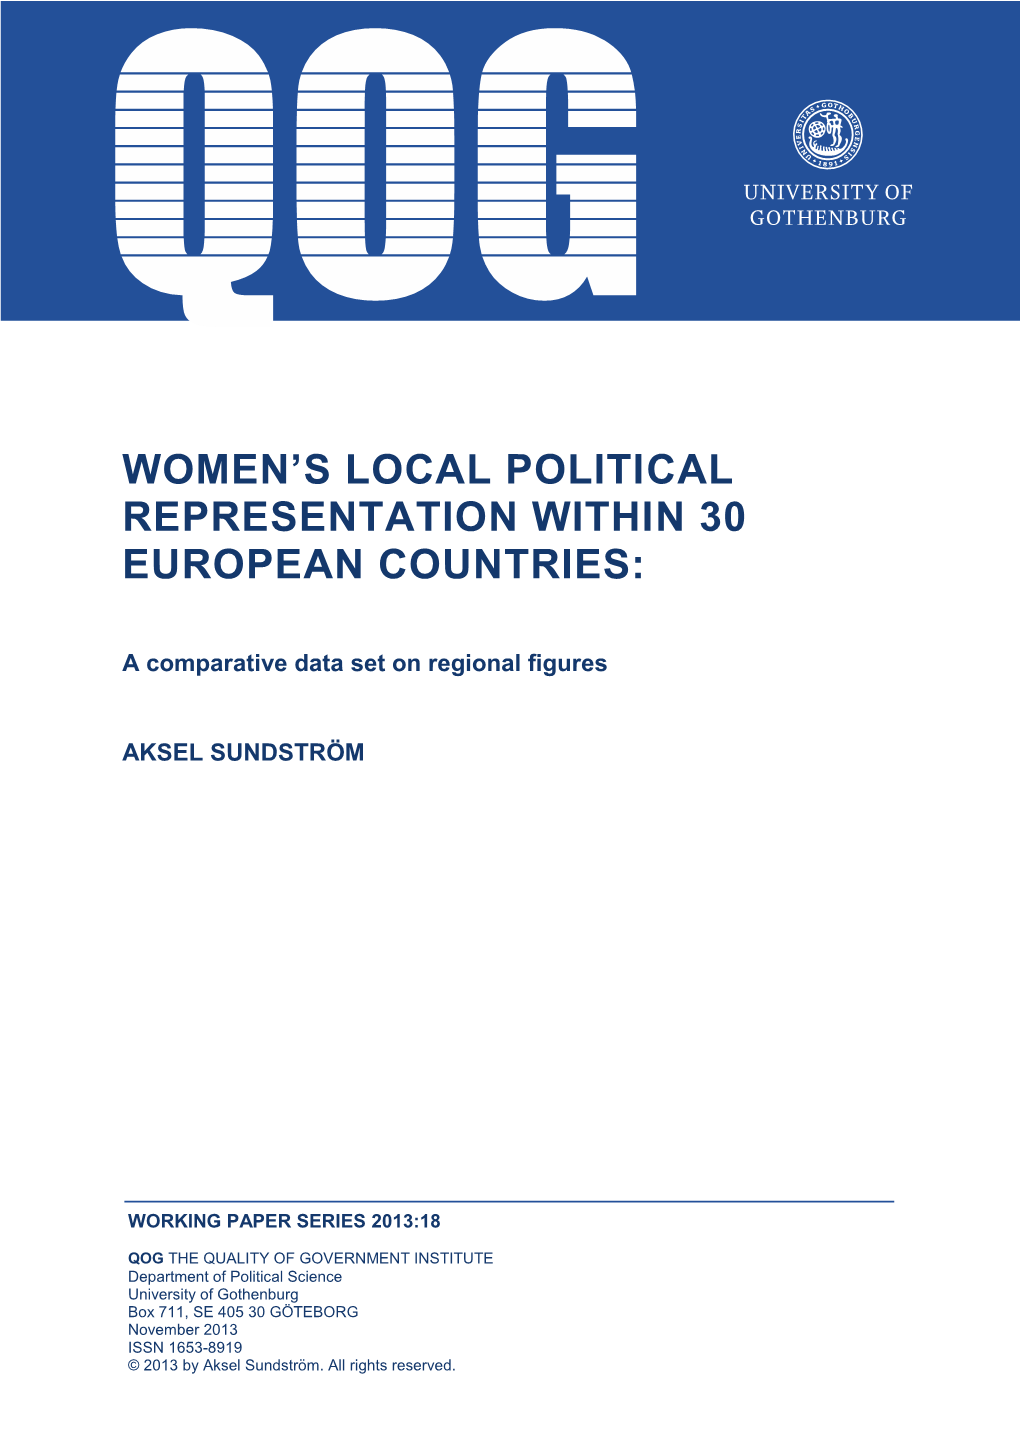 Women's Local Political Representation Within 30 European Countries